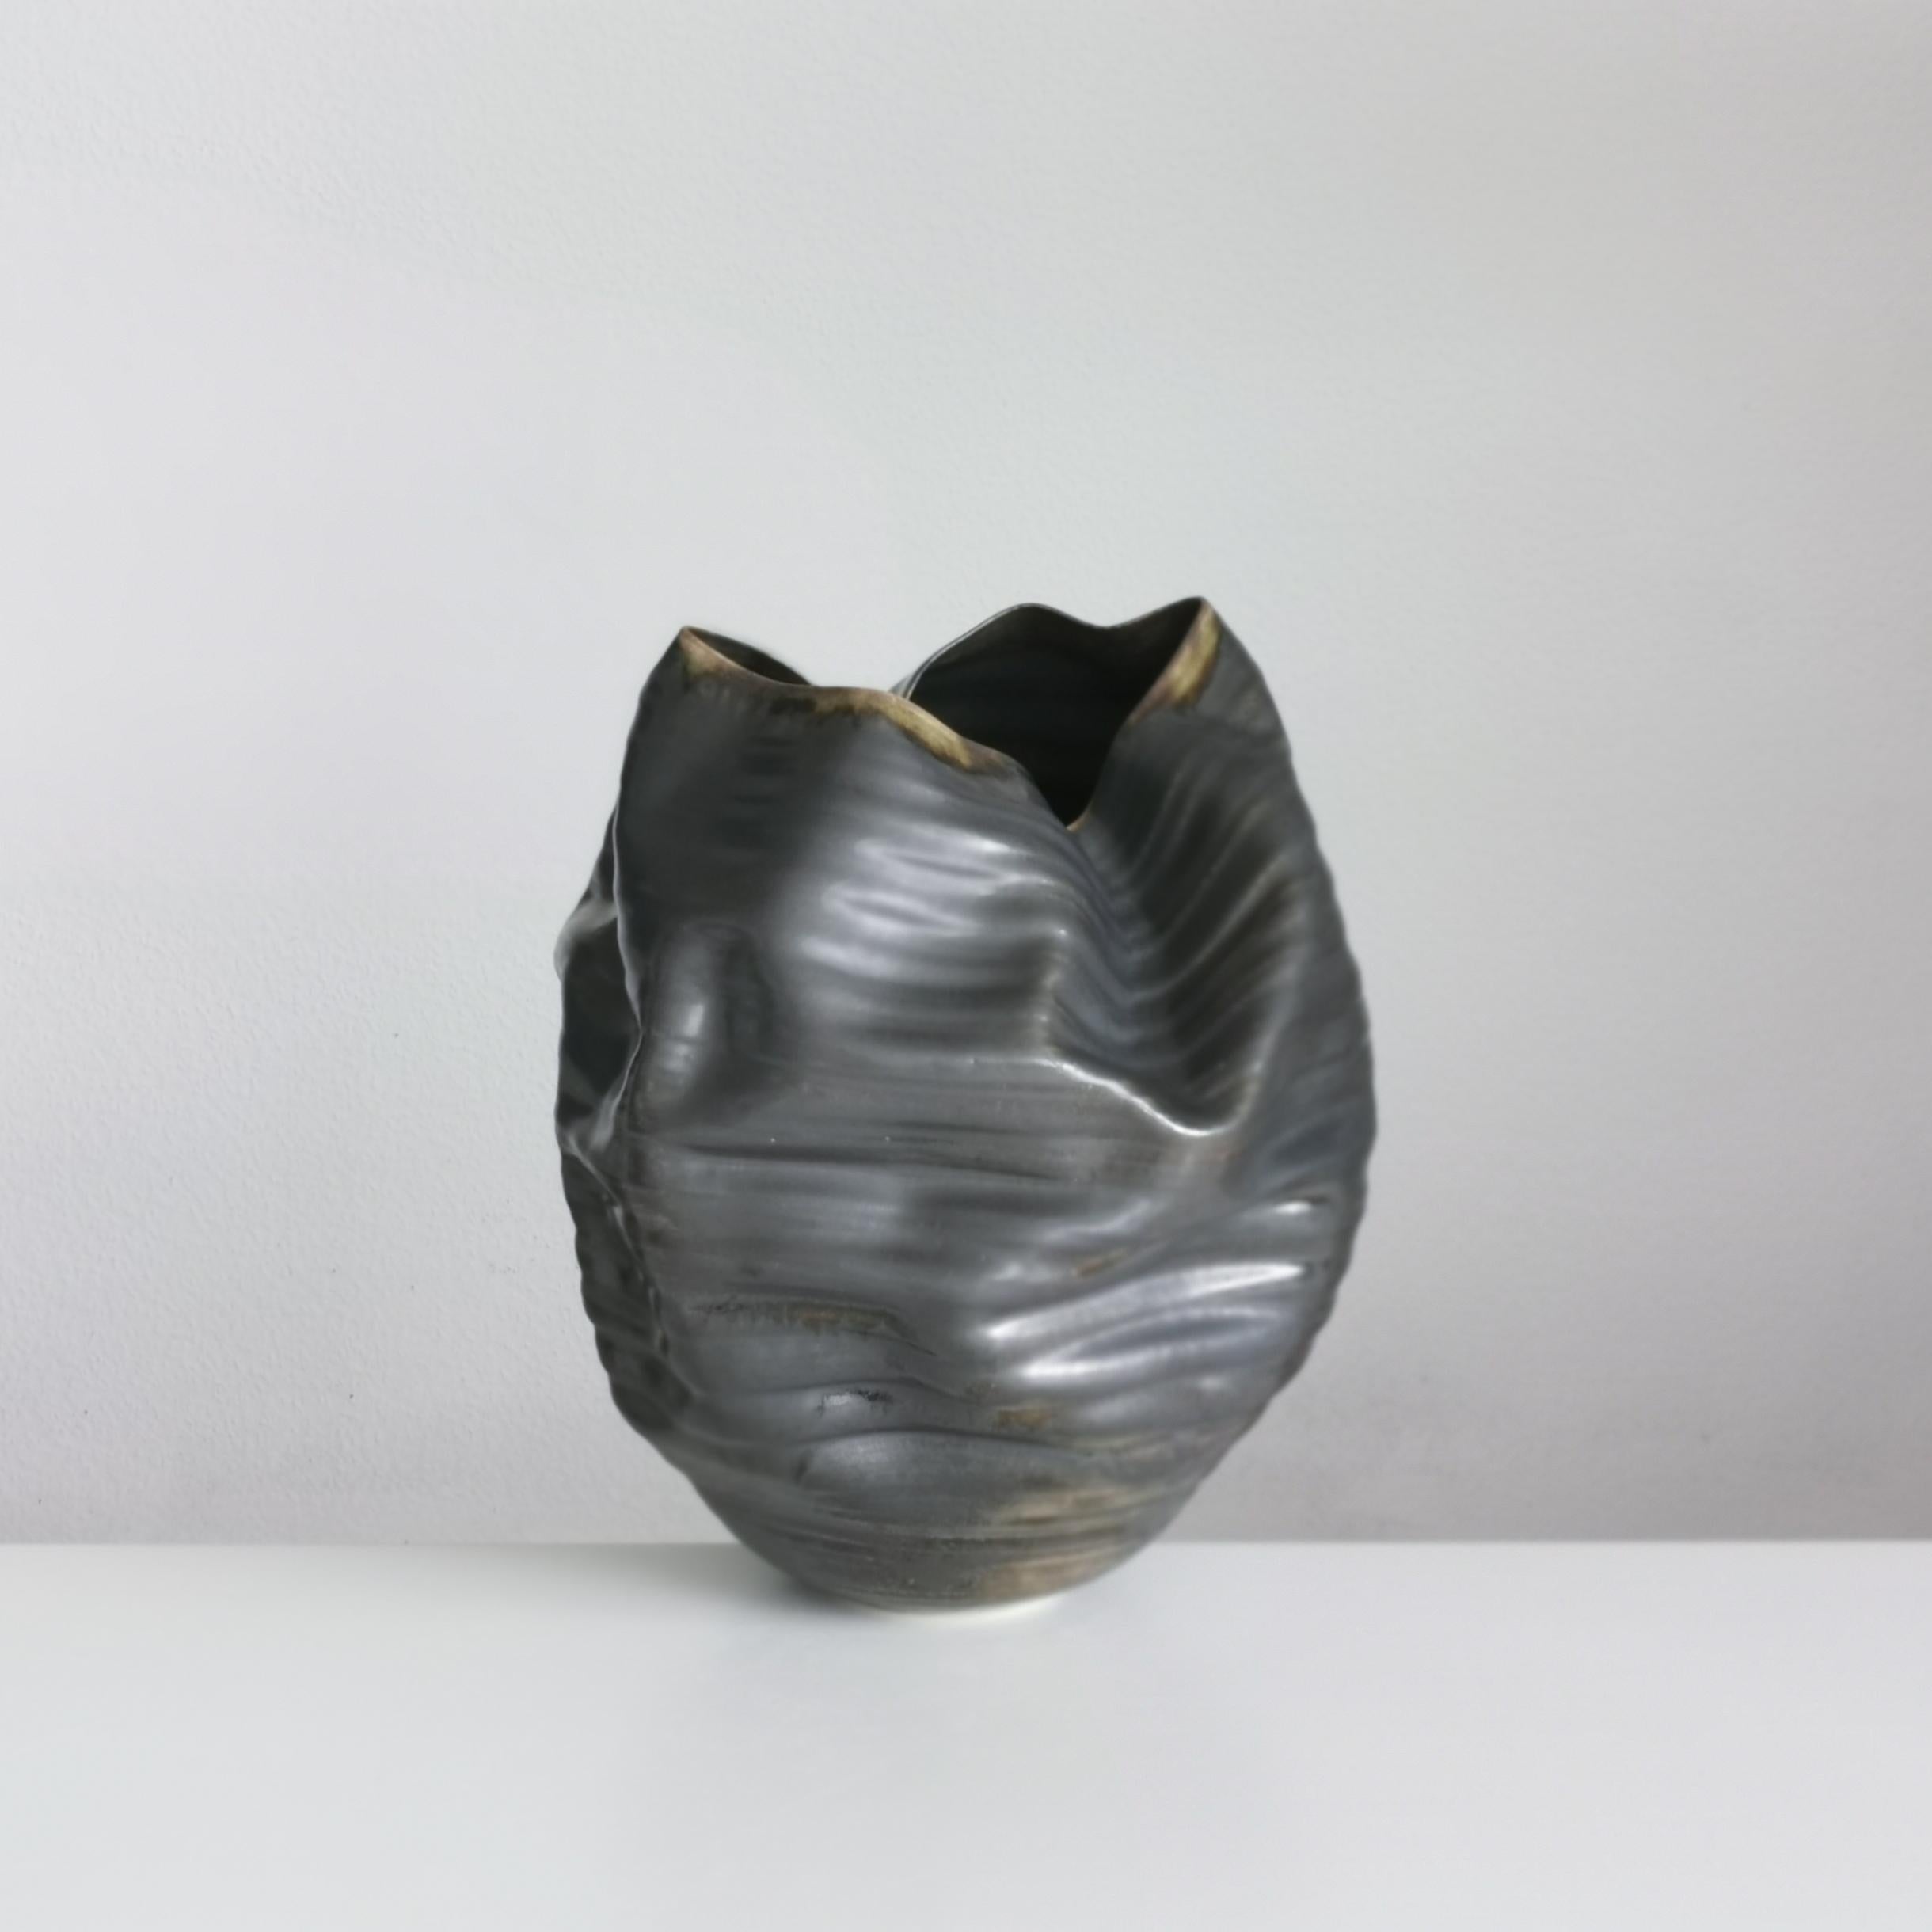 Unique Ceramic Sculpture Vessel N.58, Black Ribbed Undulating Form, Objet d'Art 1